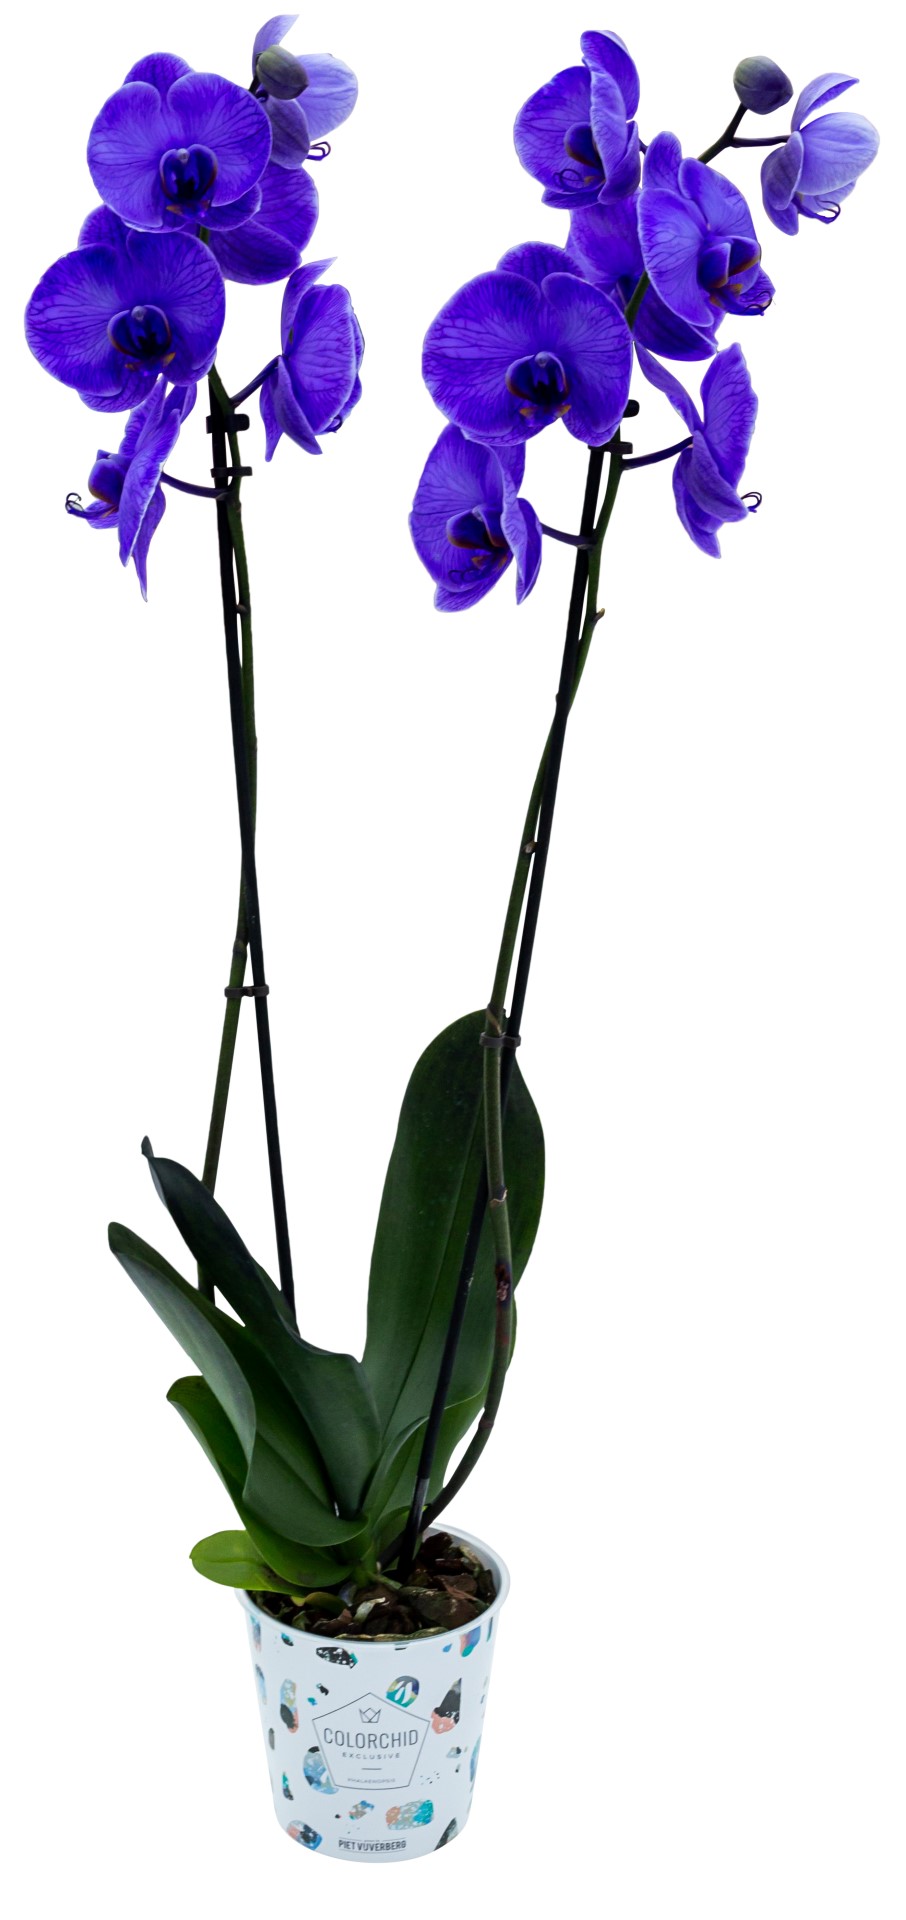 Piet Vijverberg Colorchid paars